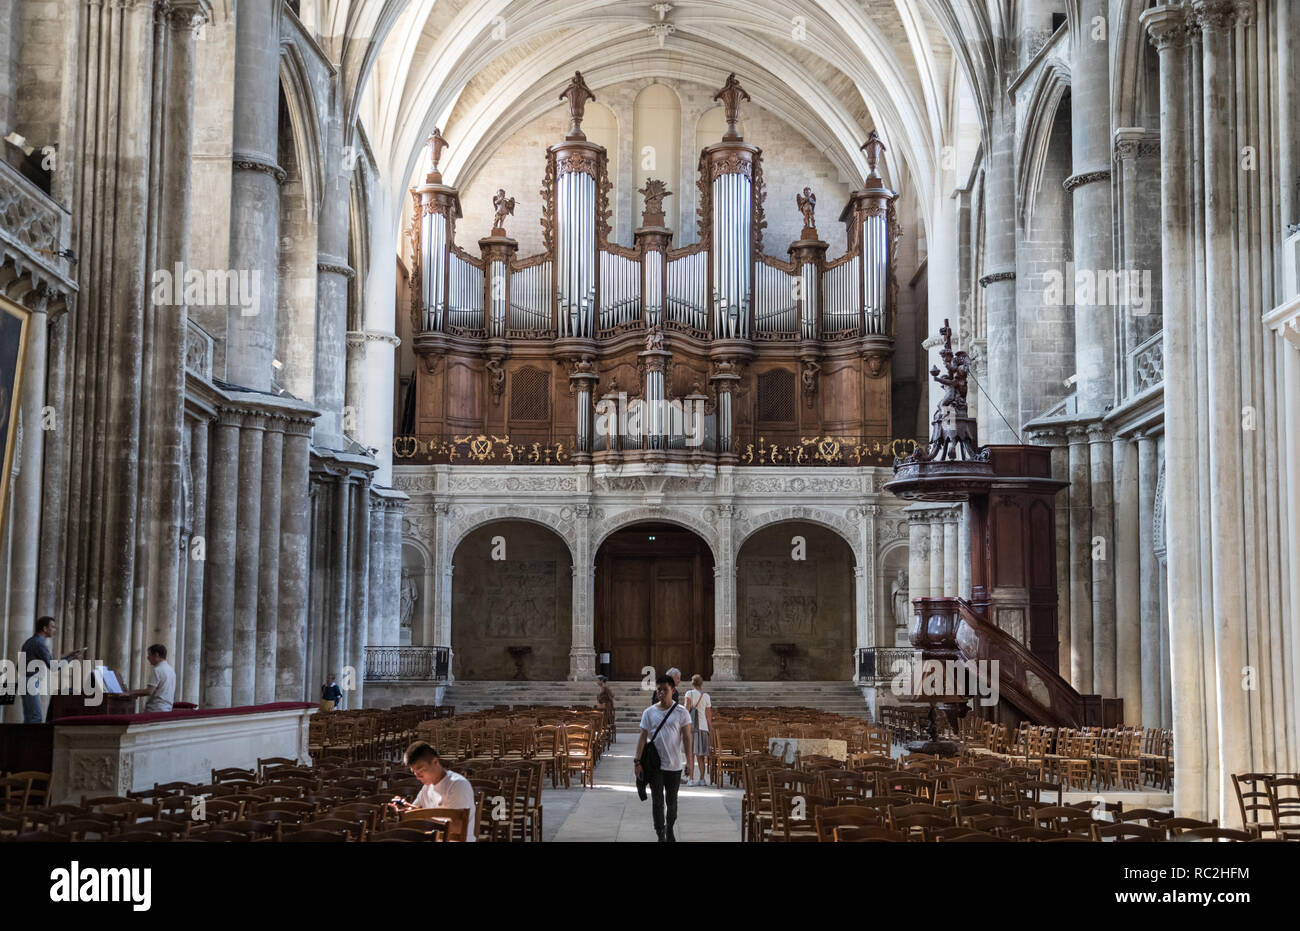 Bordeaux, Frankreich - 27 September, 2018: Die innere Architektur der Kathedrale Saint Andre in Bordeaux, Frankreich Stockfoto